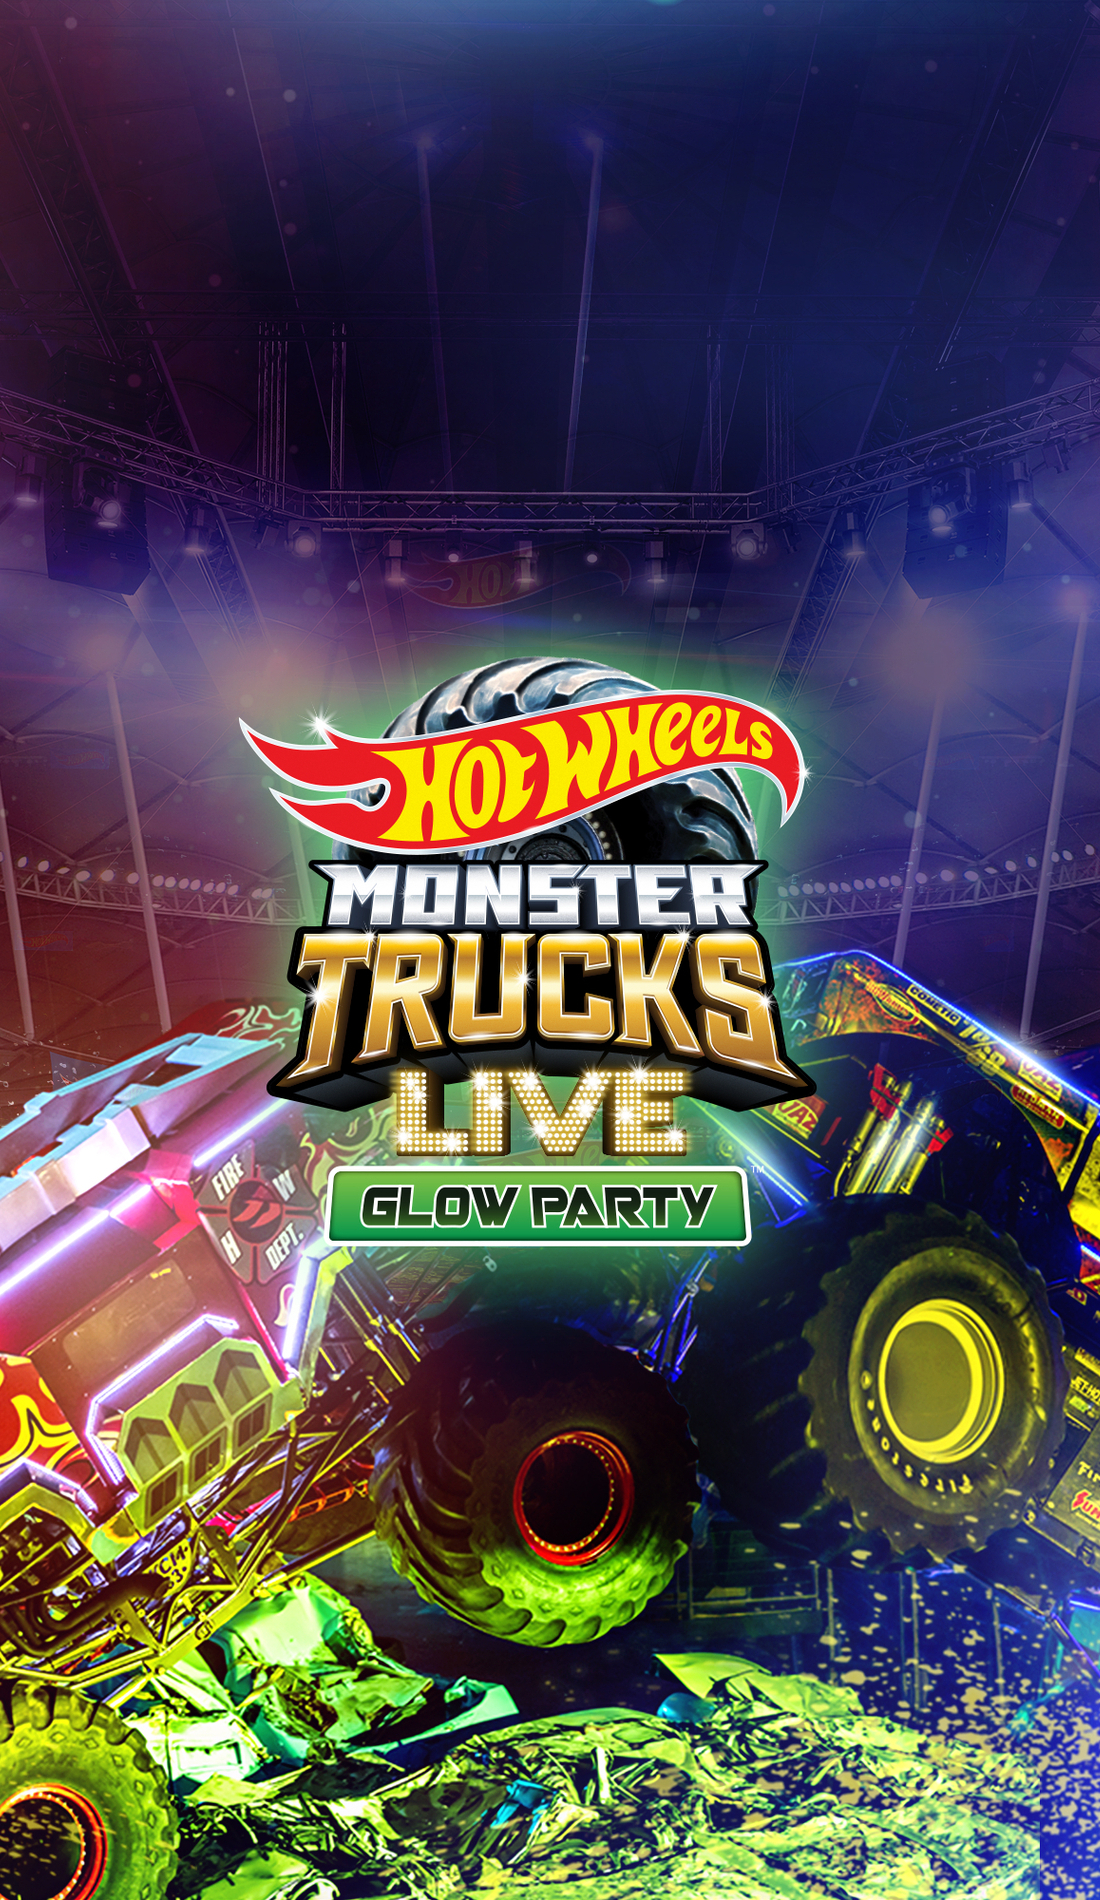 A Hot Wheels Monster Trucks Live live event